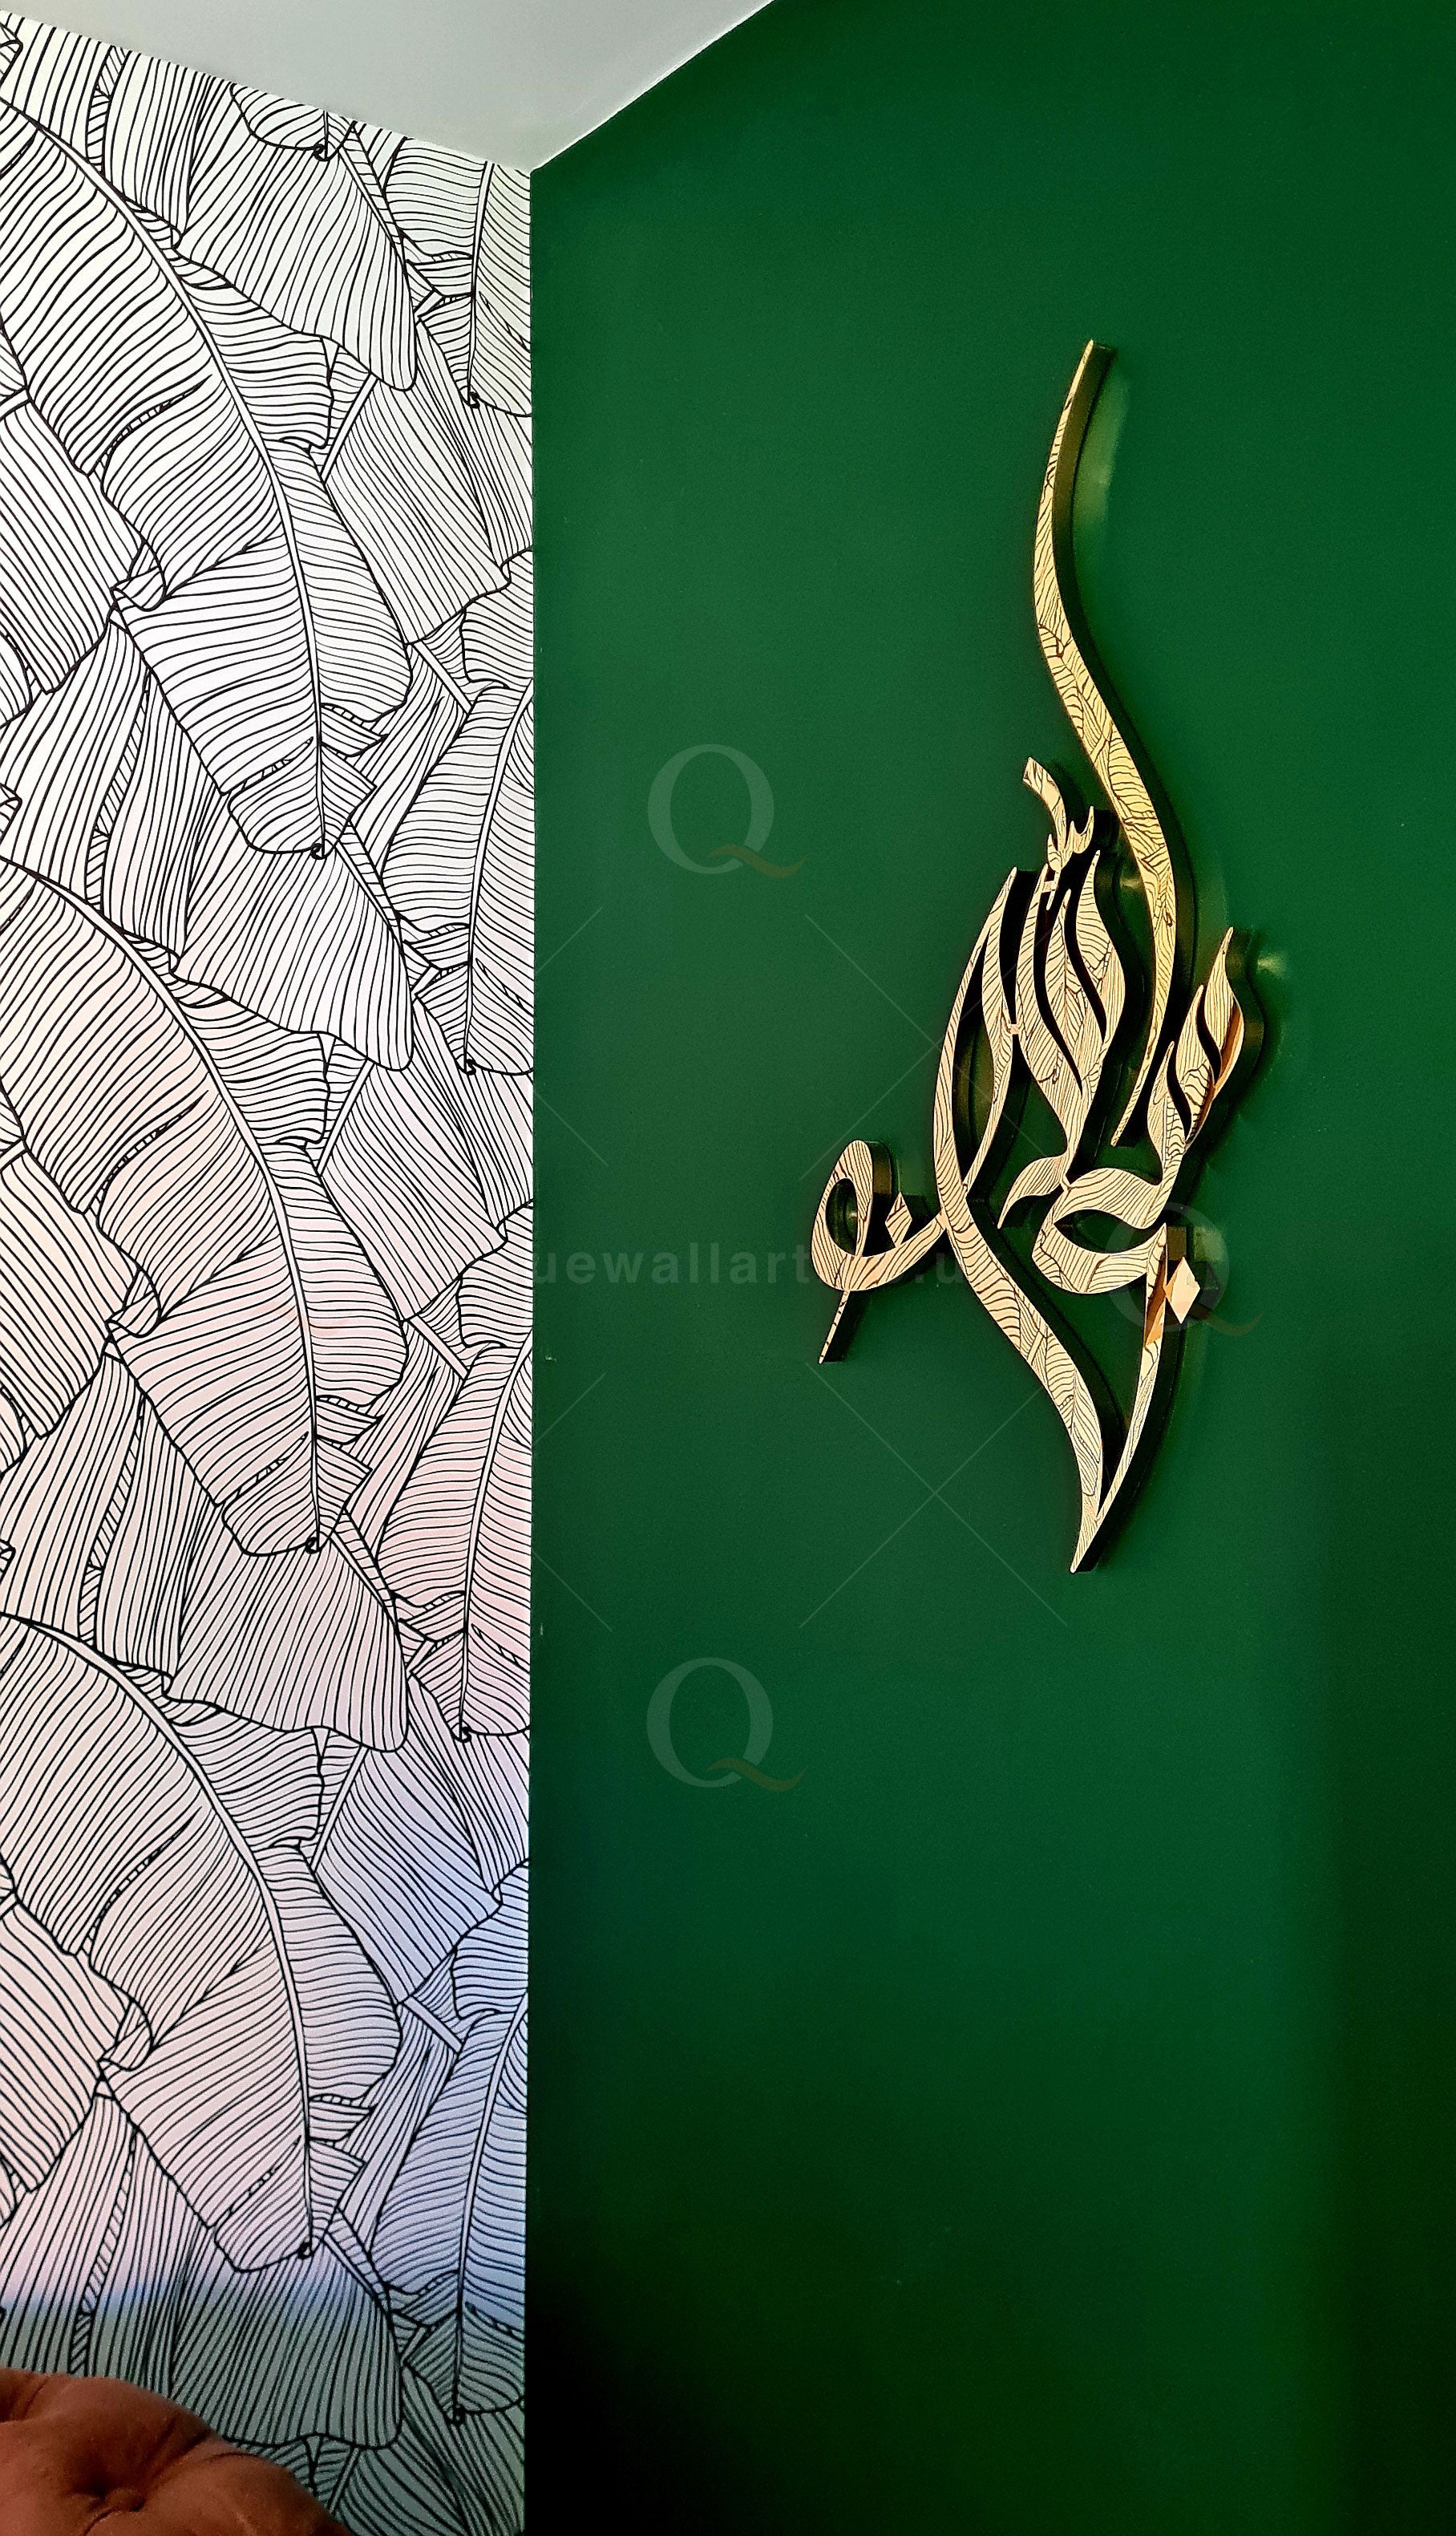 SubhanAllah Bespoke Wall Art  Arabic Calligraphy Stainless Steel